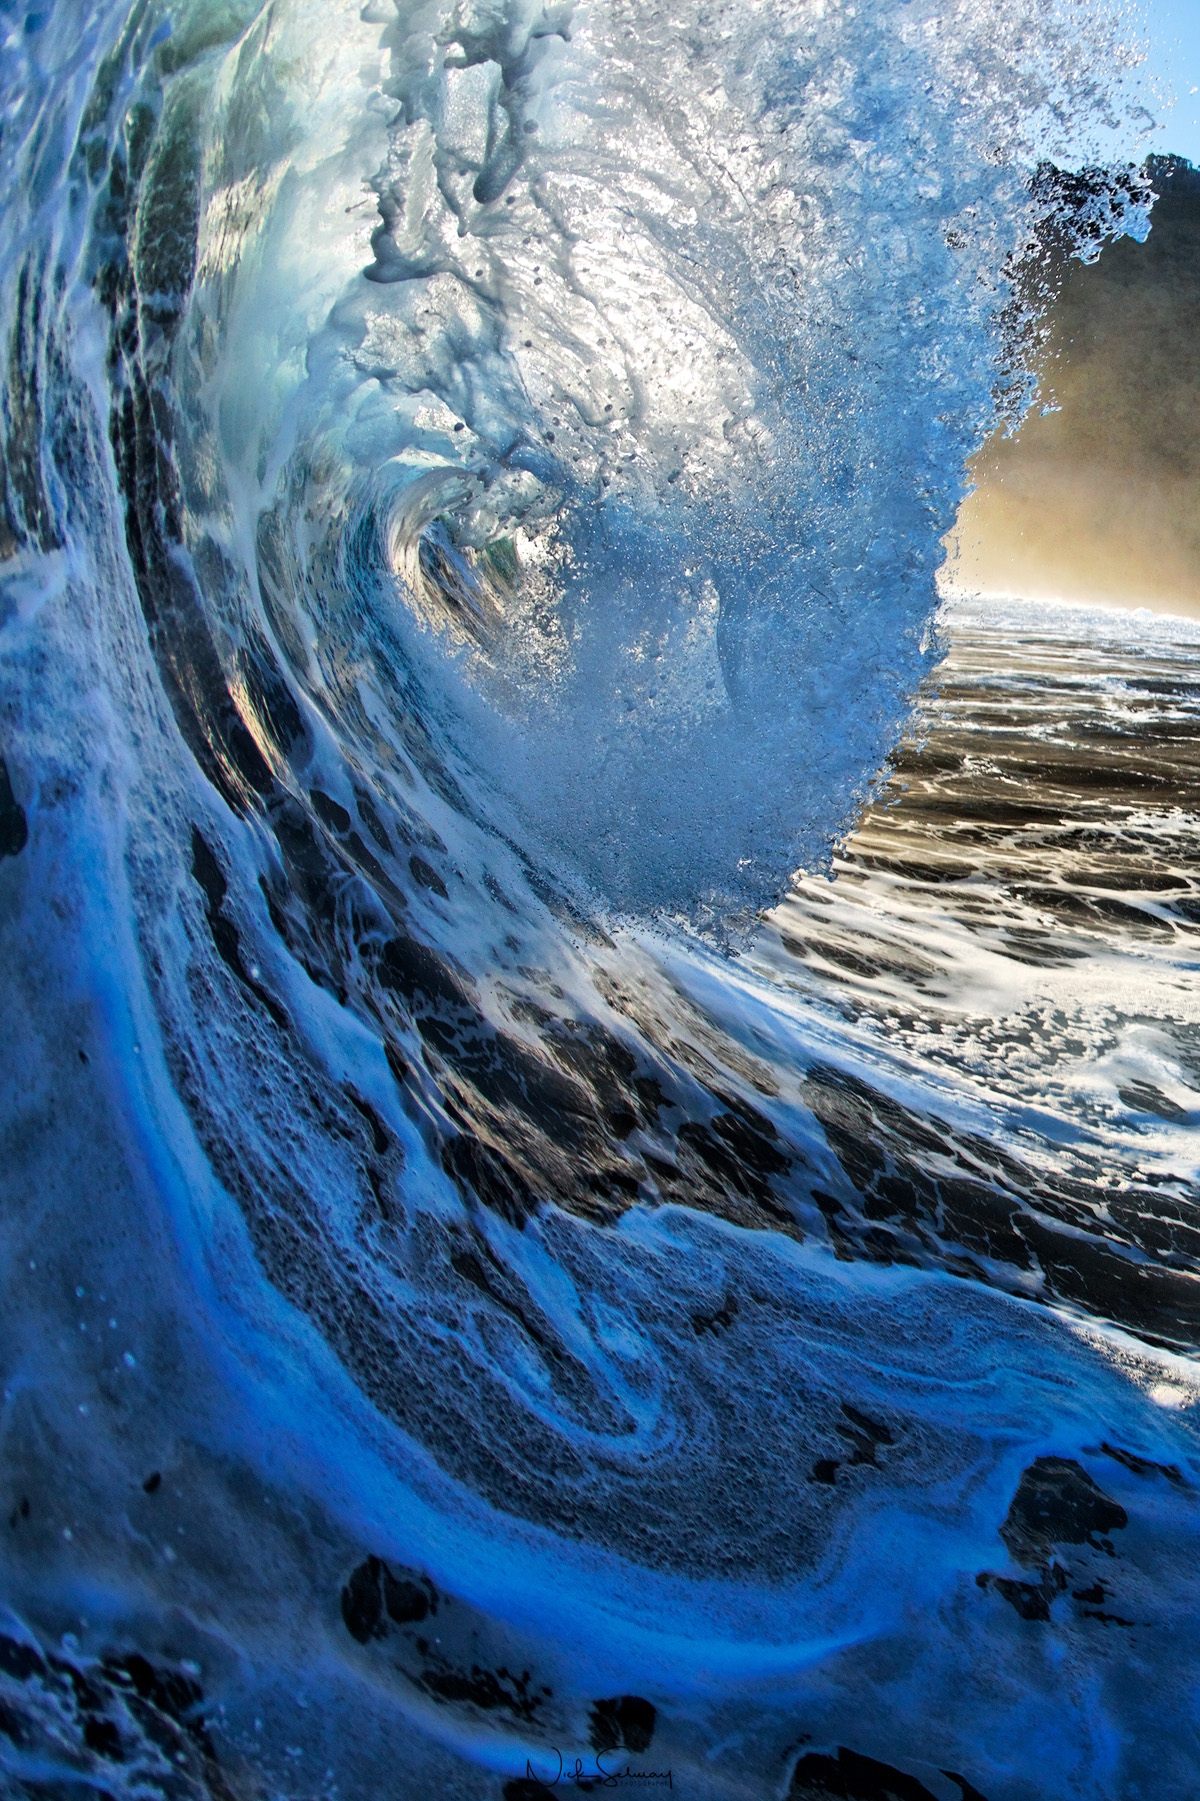 Waipio Valley Wave Image for Sale